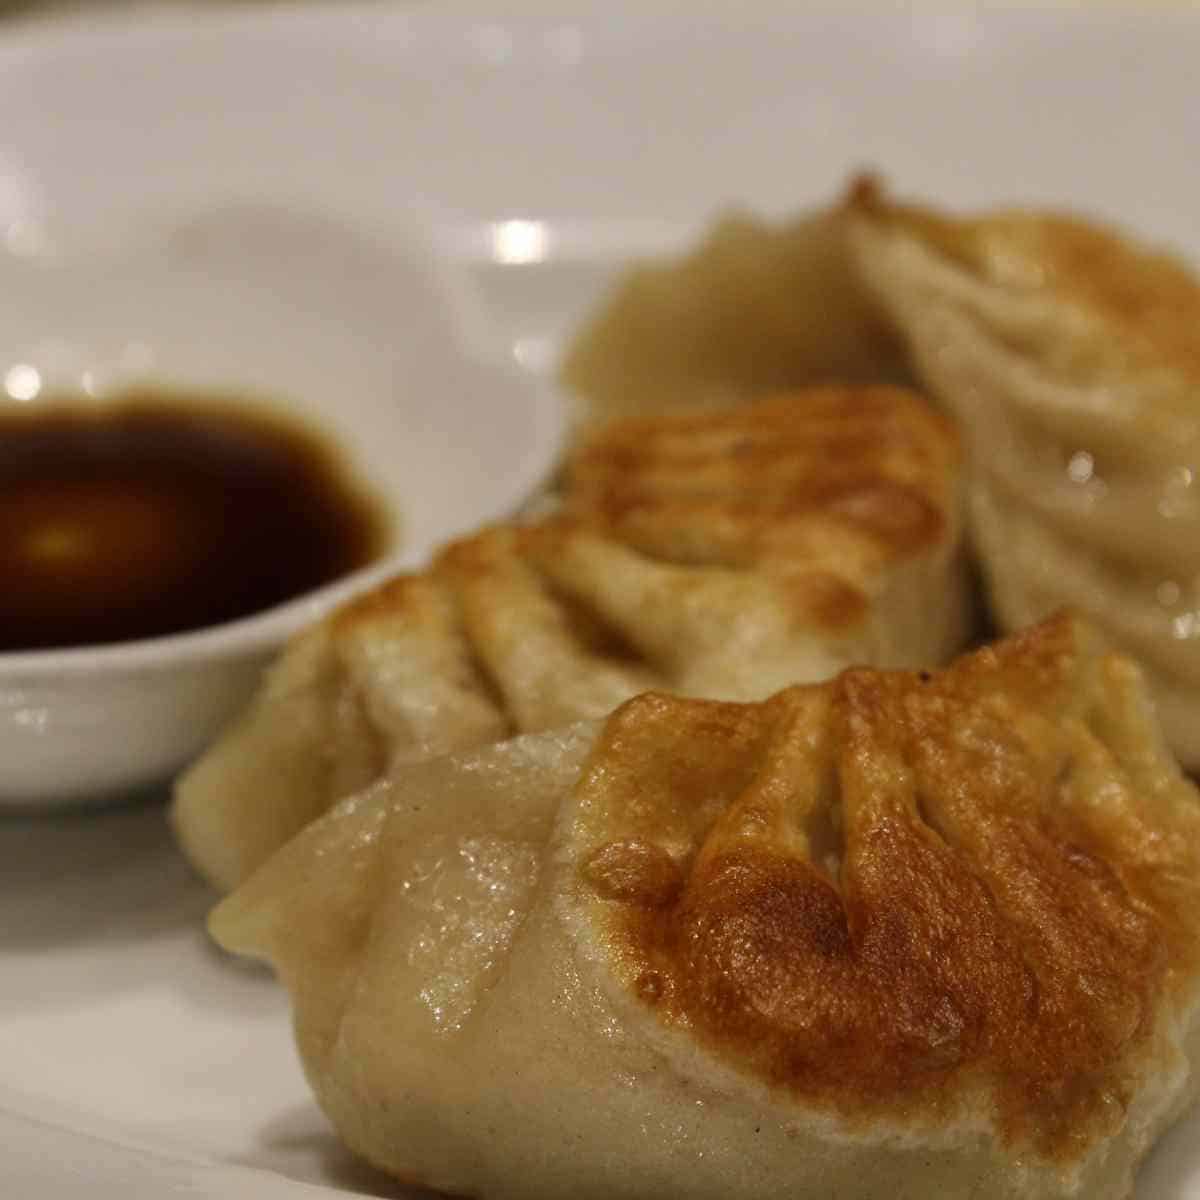 Pan fried dumplings at JinLi